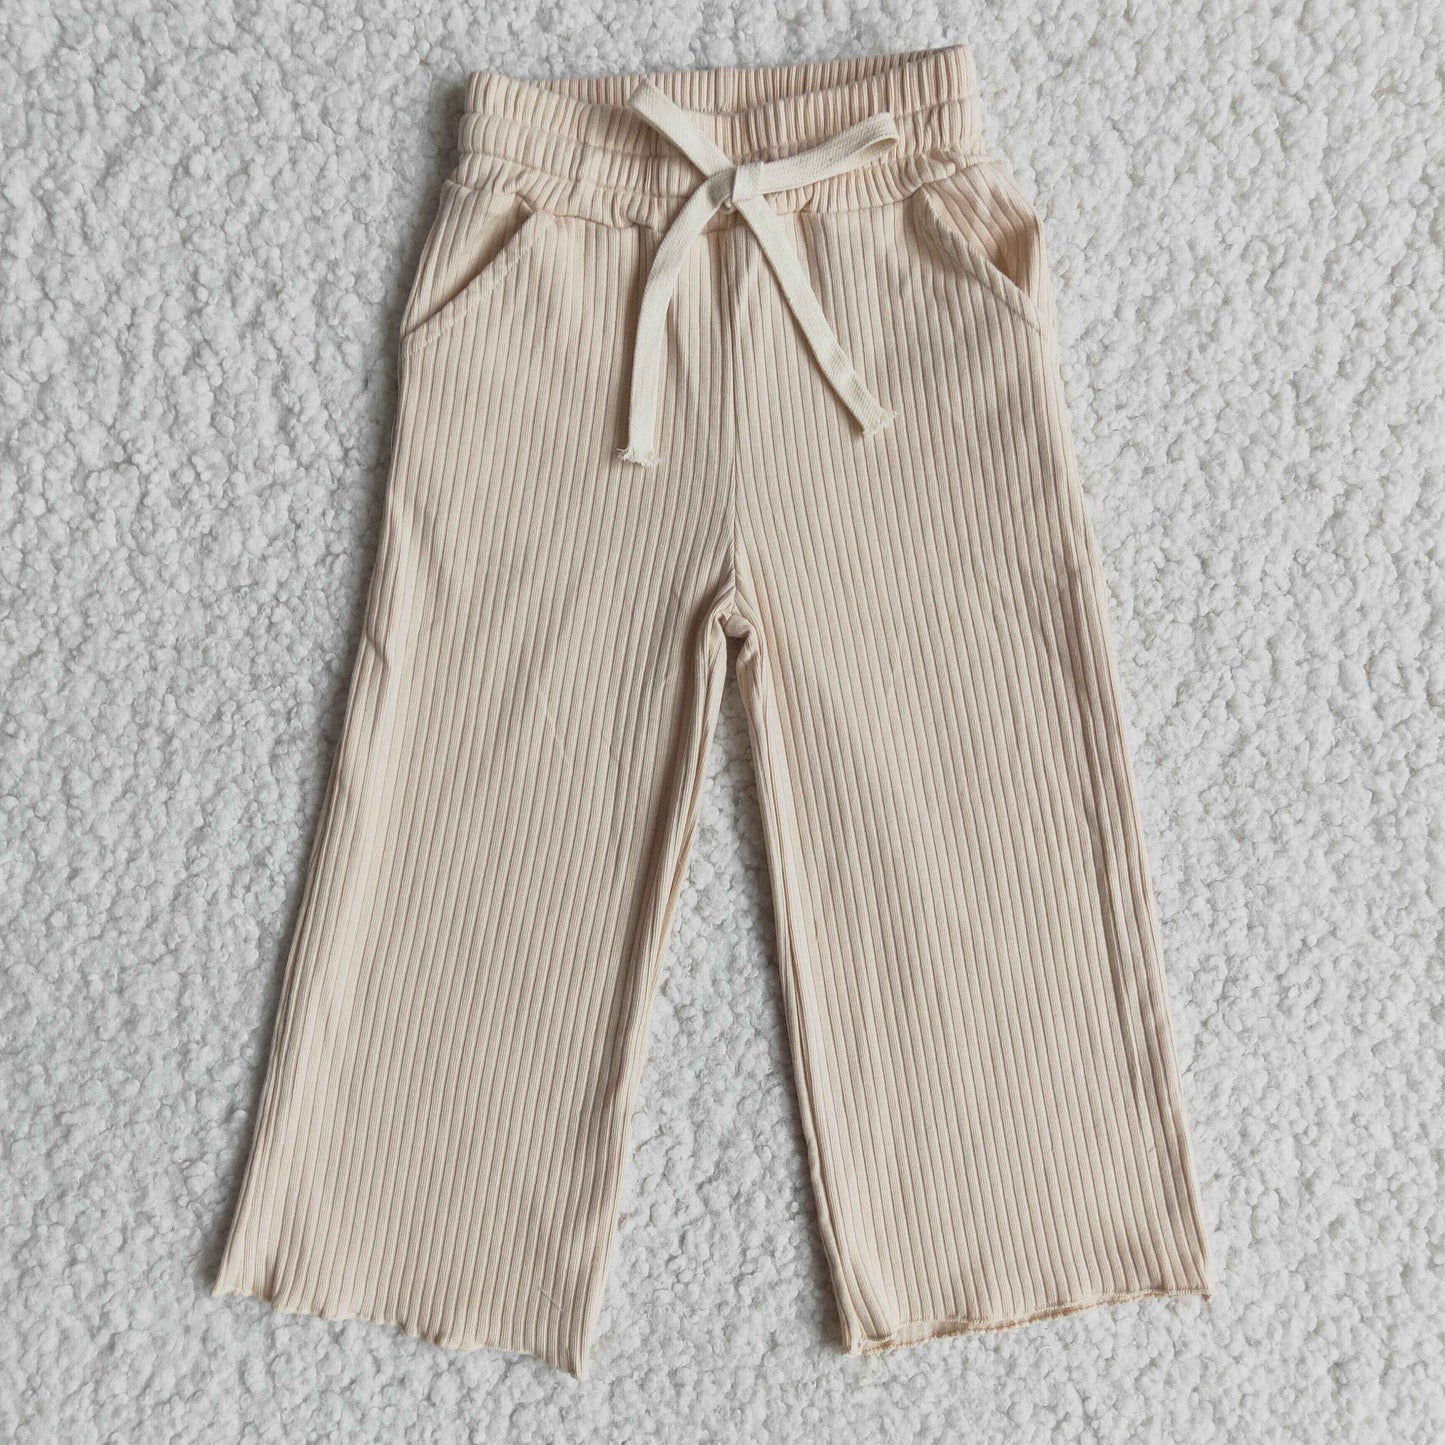 Khaki stripe cotton elastic waistband pants